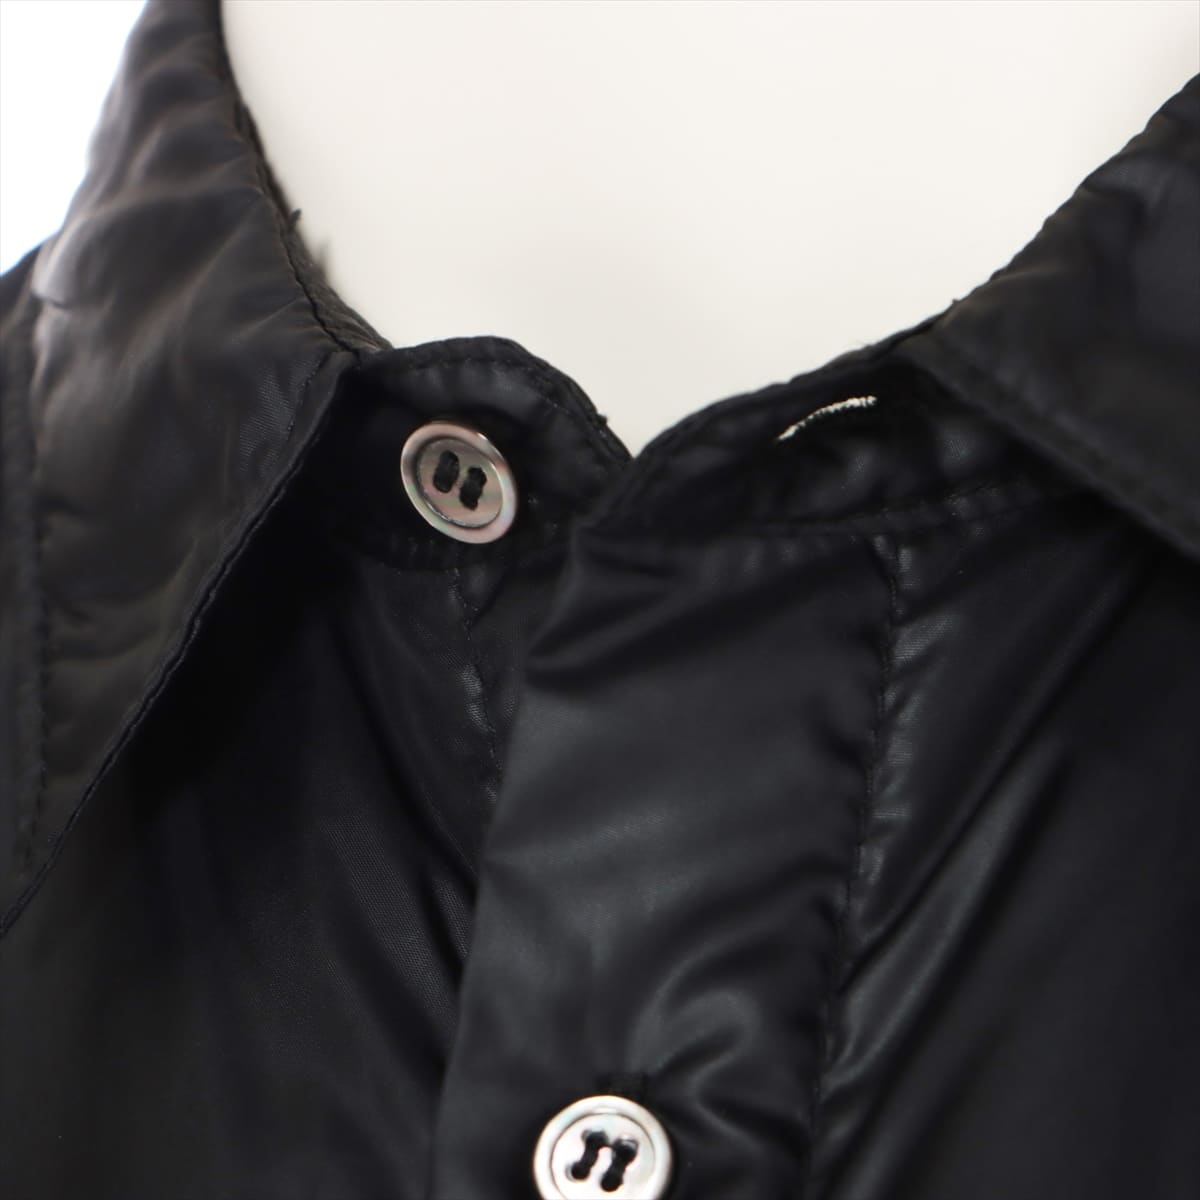 COMME des GARÇONS HOMME Polyester Insulated jacket M Men's Black